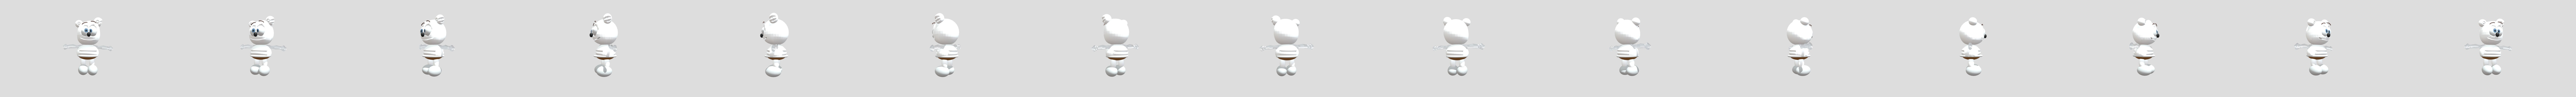 Gummibär Remake The Gummy Bear Song - 2 8 - 2 9 - Download Free 3D model by  abymaelfreitas4 (@abymaelfreitas4) [6d94efb]